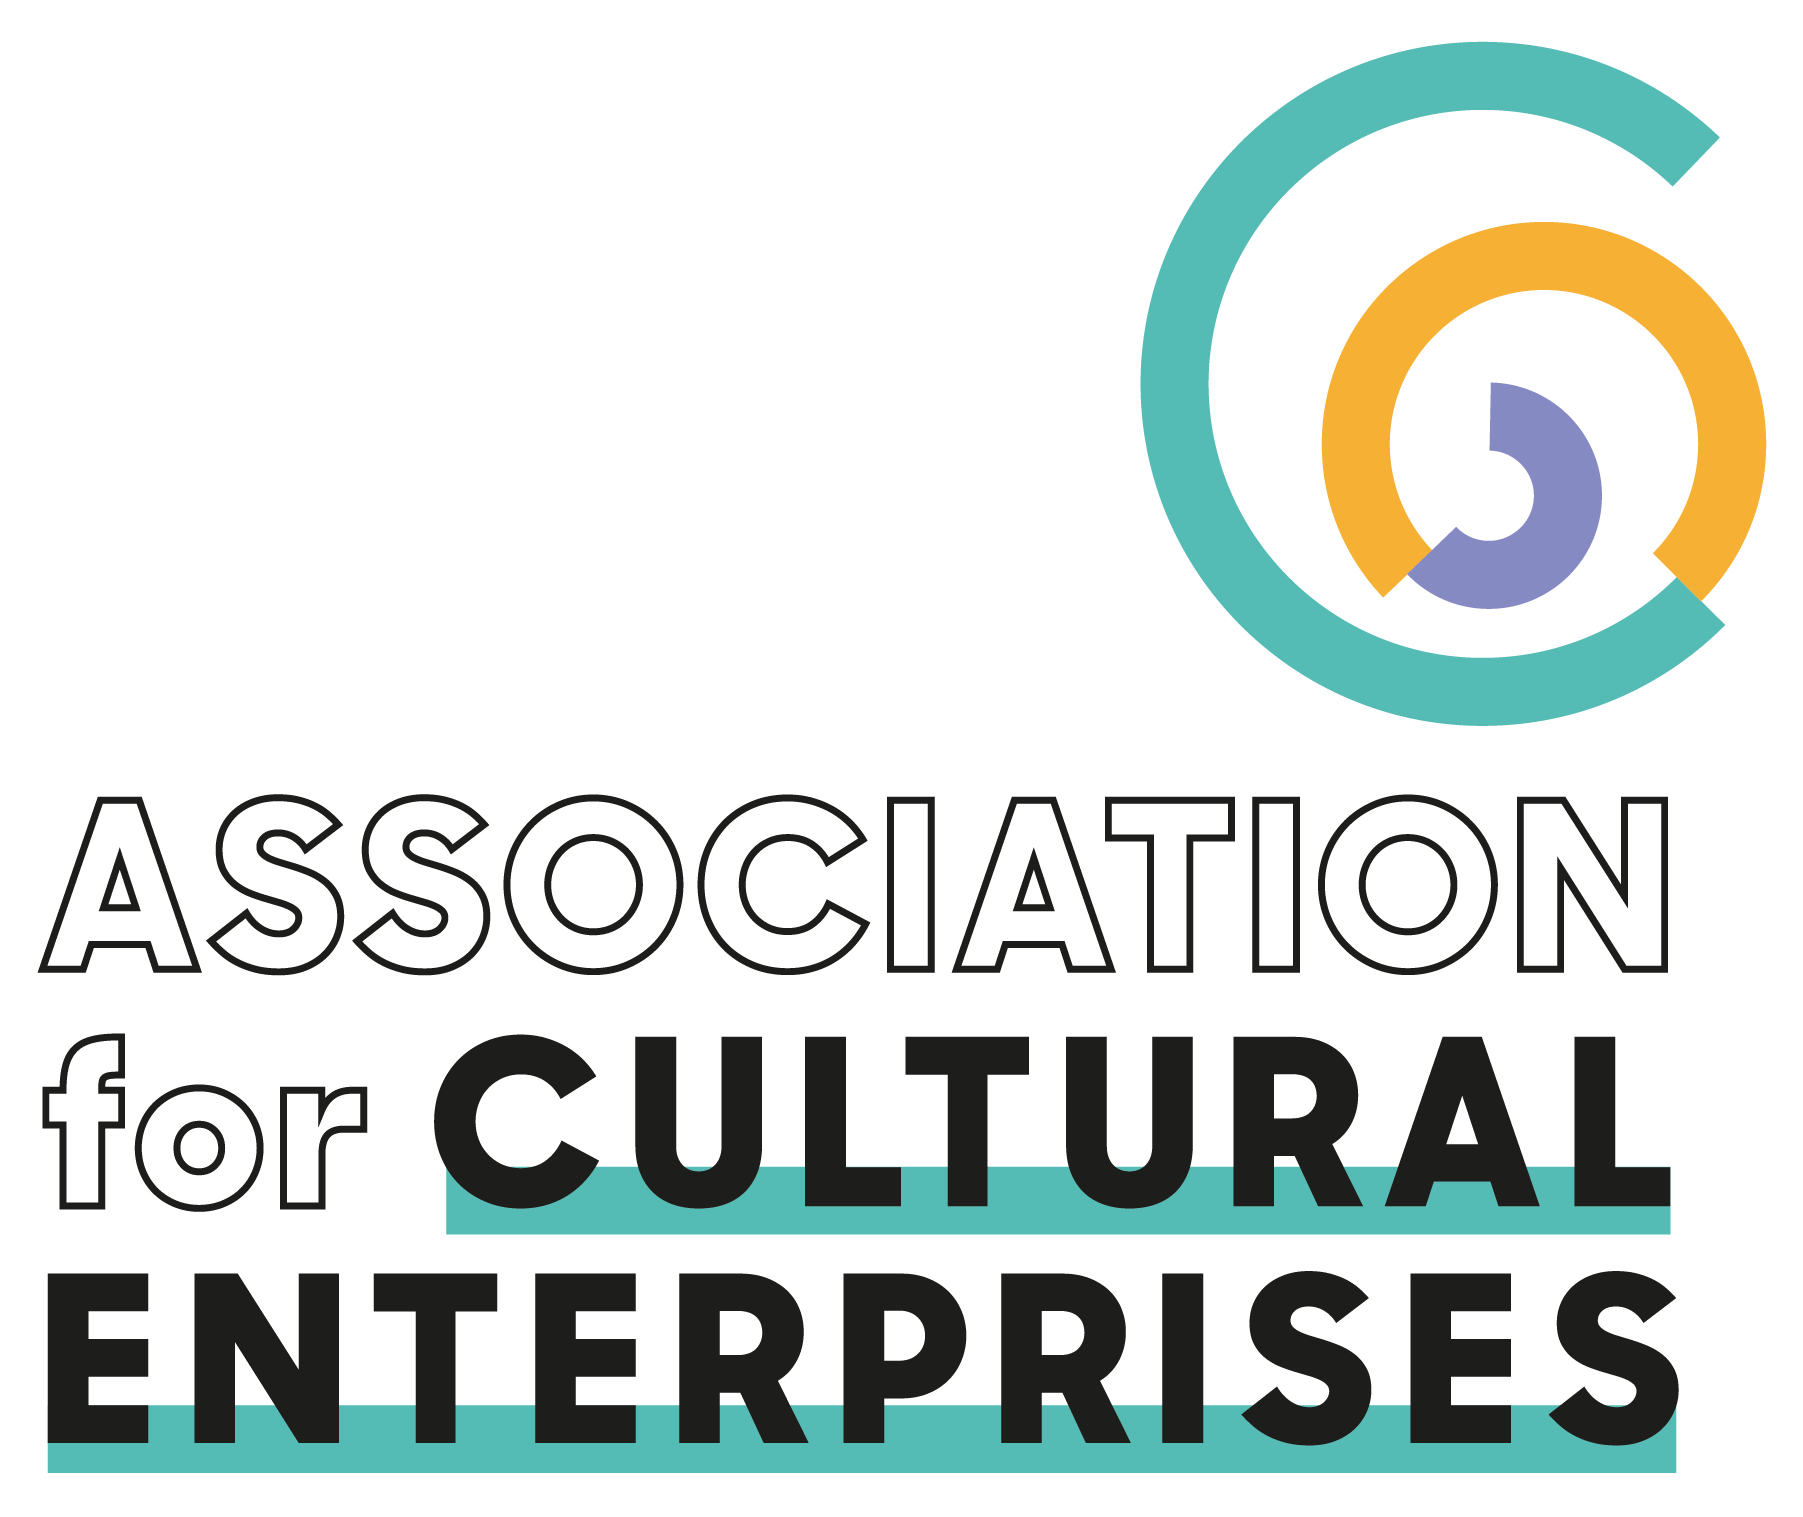 Durham Dales Centre Stanhope - Association for Cultural Enterprises